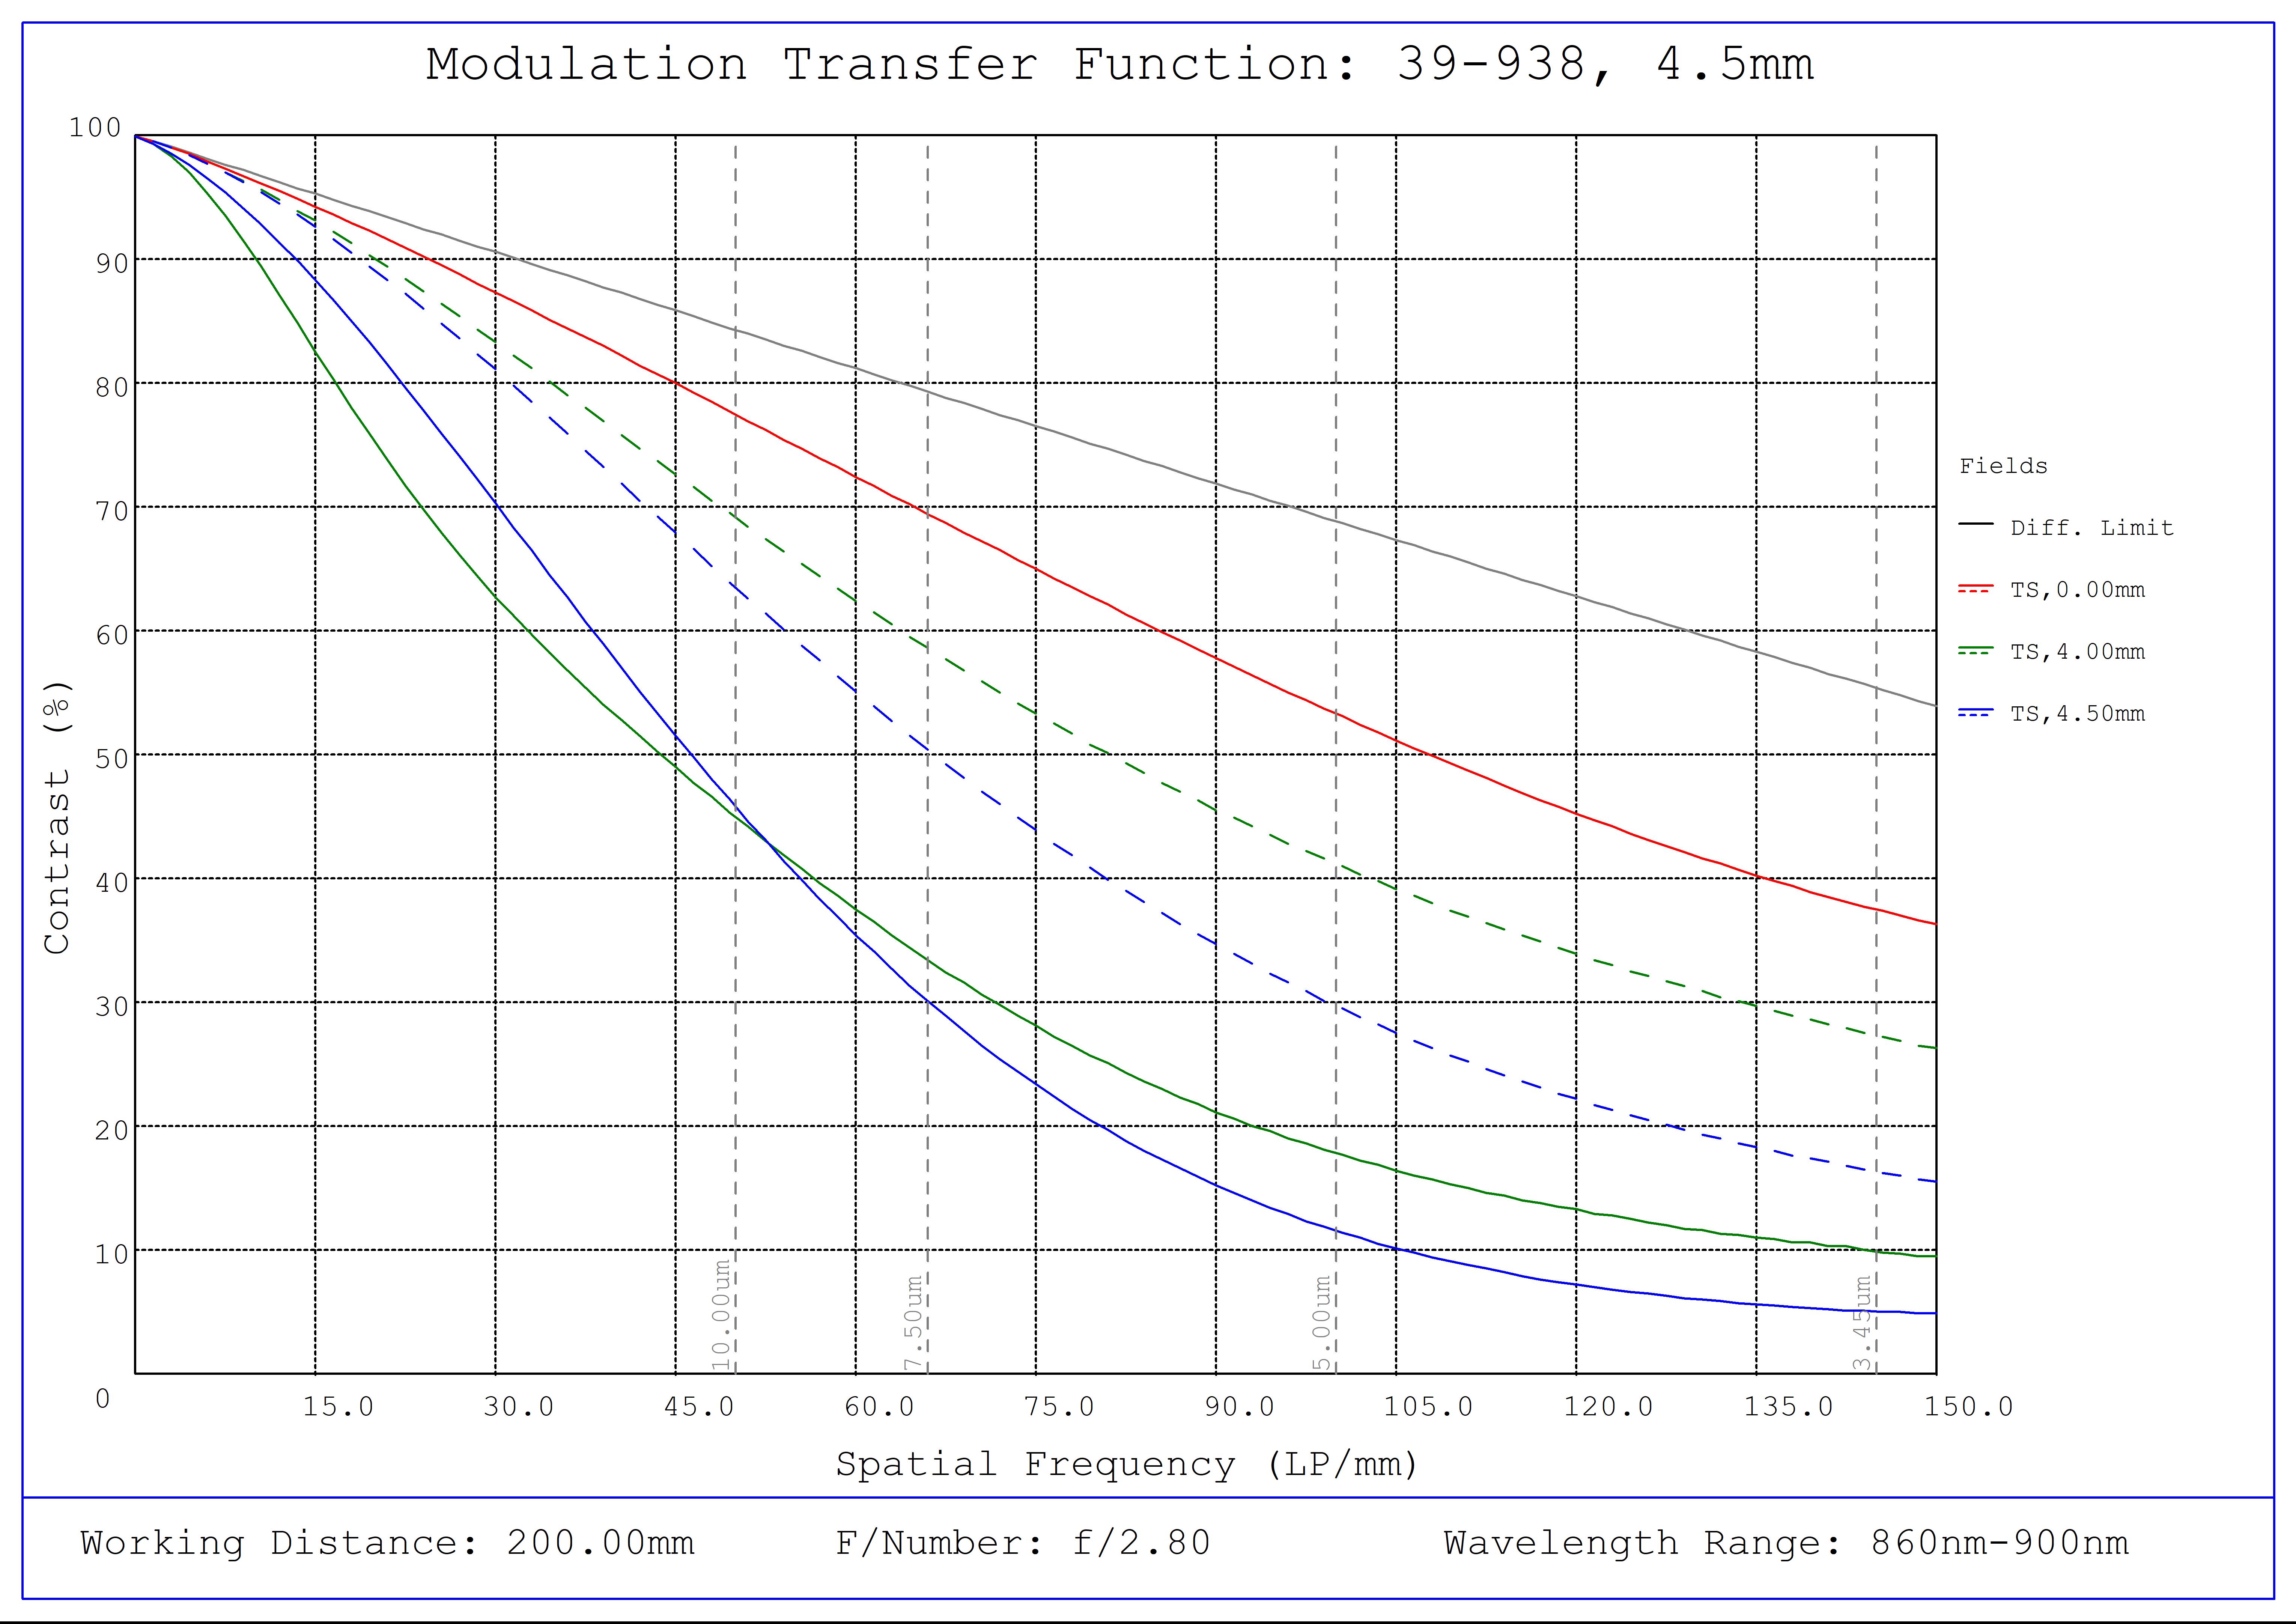 #39-938, 4.5mm C VIS-NIR Series Fixed Focal Length Lens, Modulated Transfer Function (MTF) Plot (NIR), 200mm Working Distance, f2.8